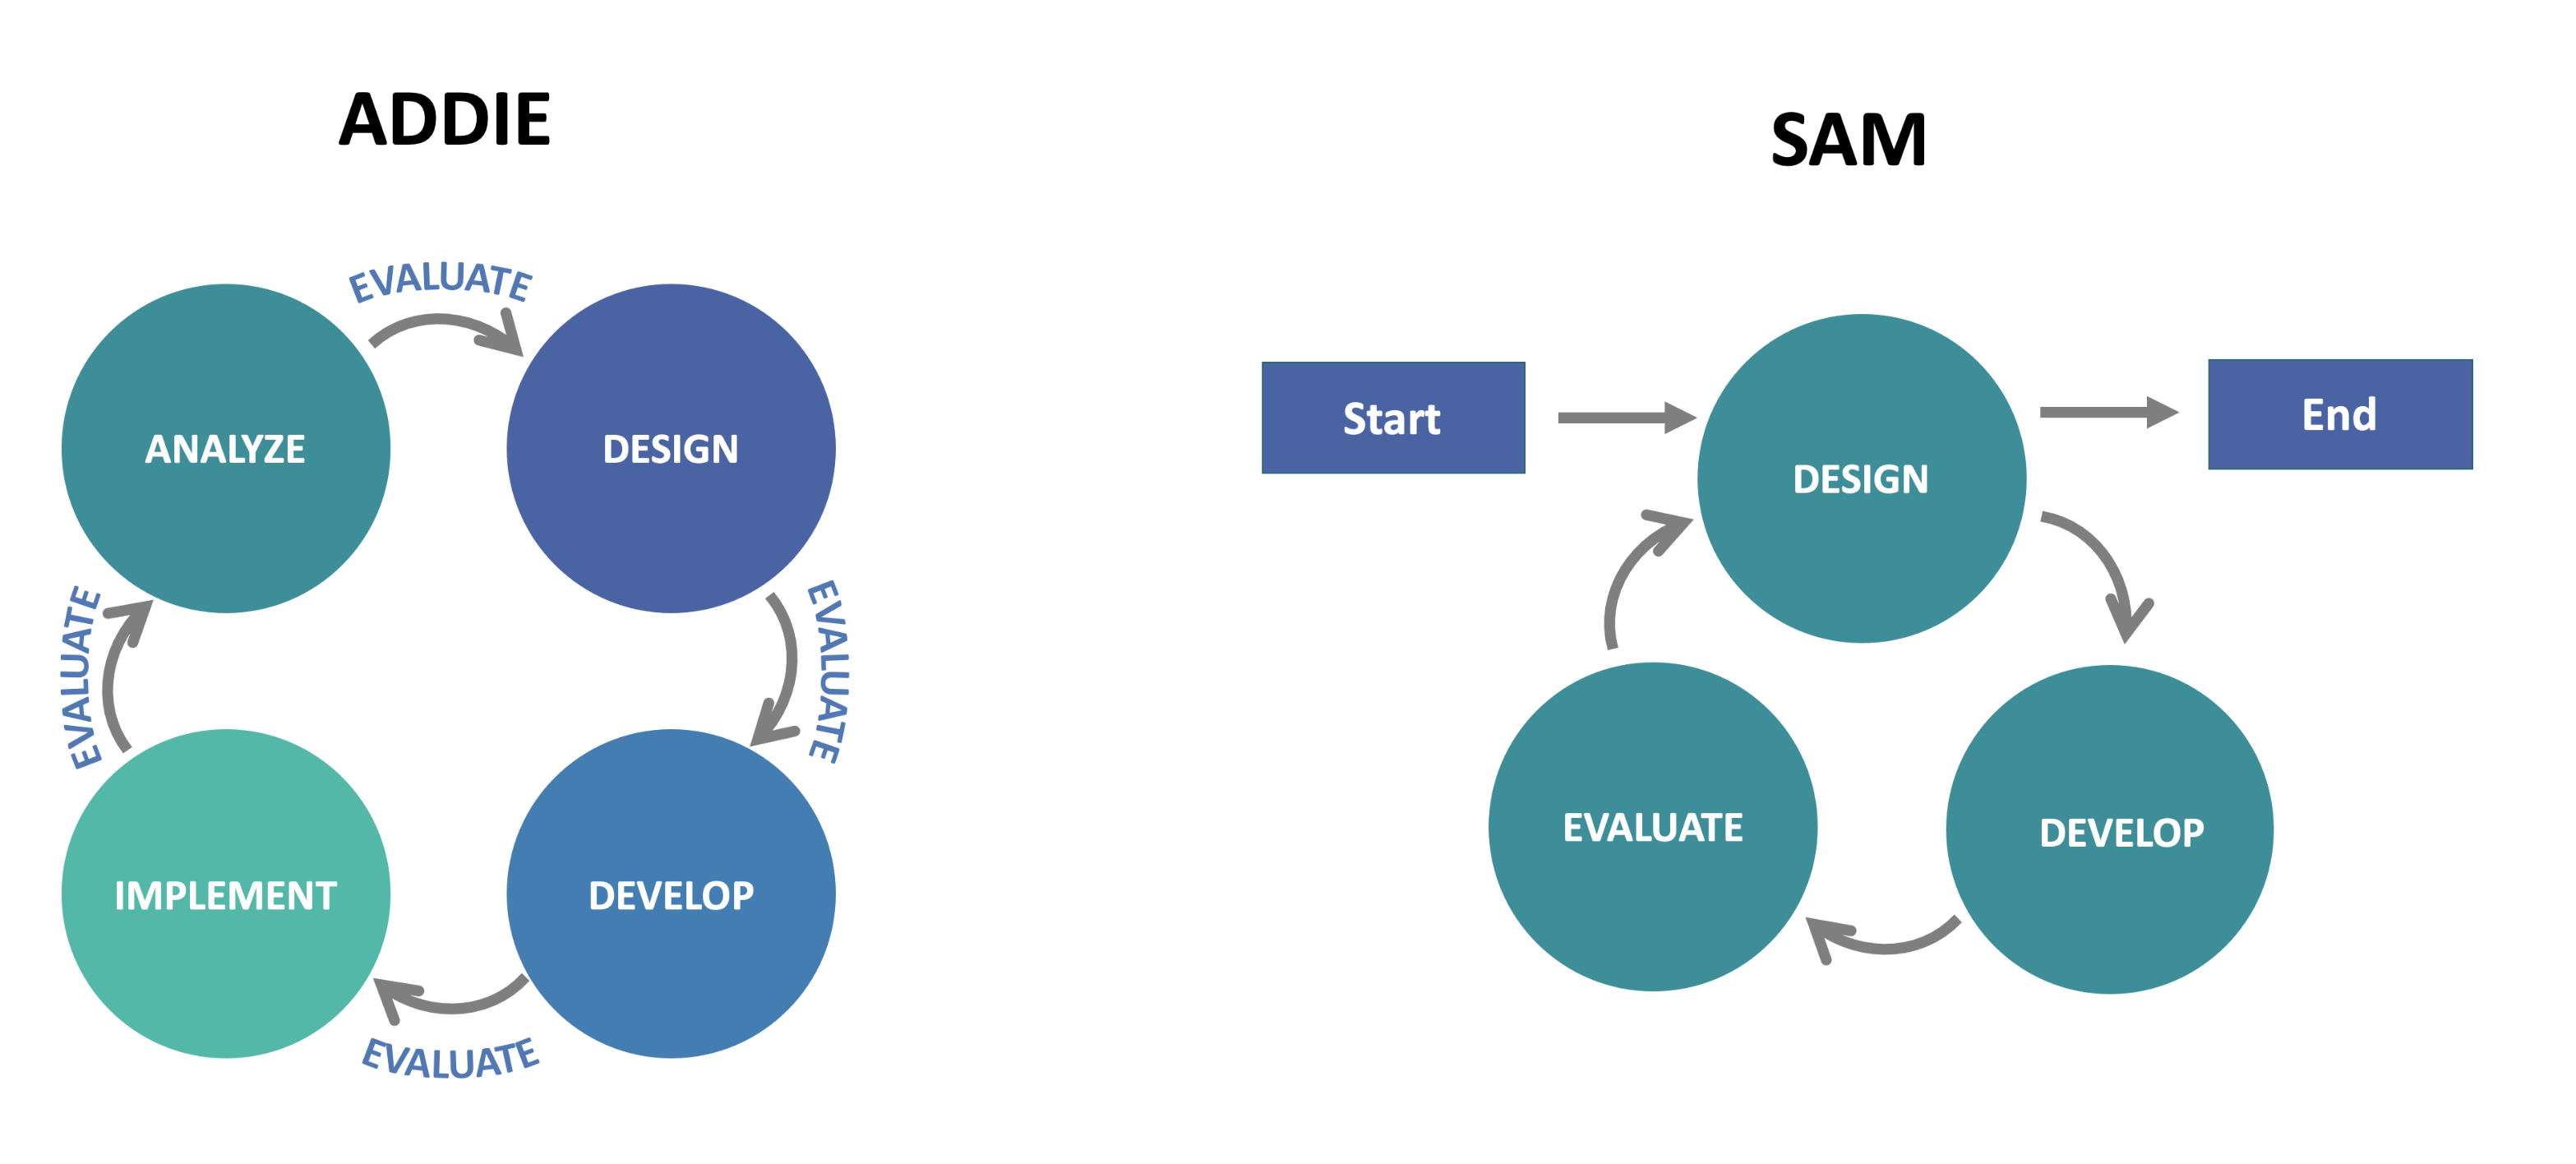 Image comparing ADDIE and SAM Models of Instructional Design